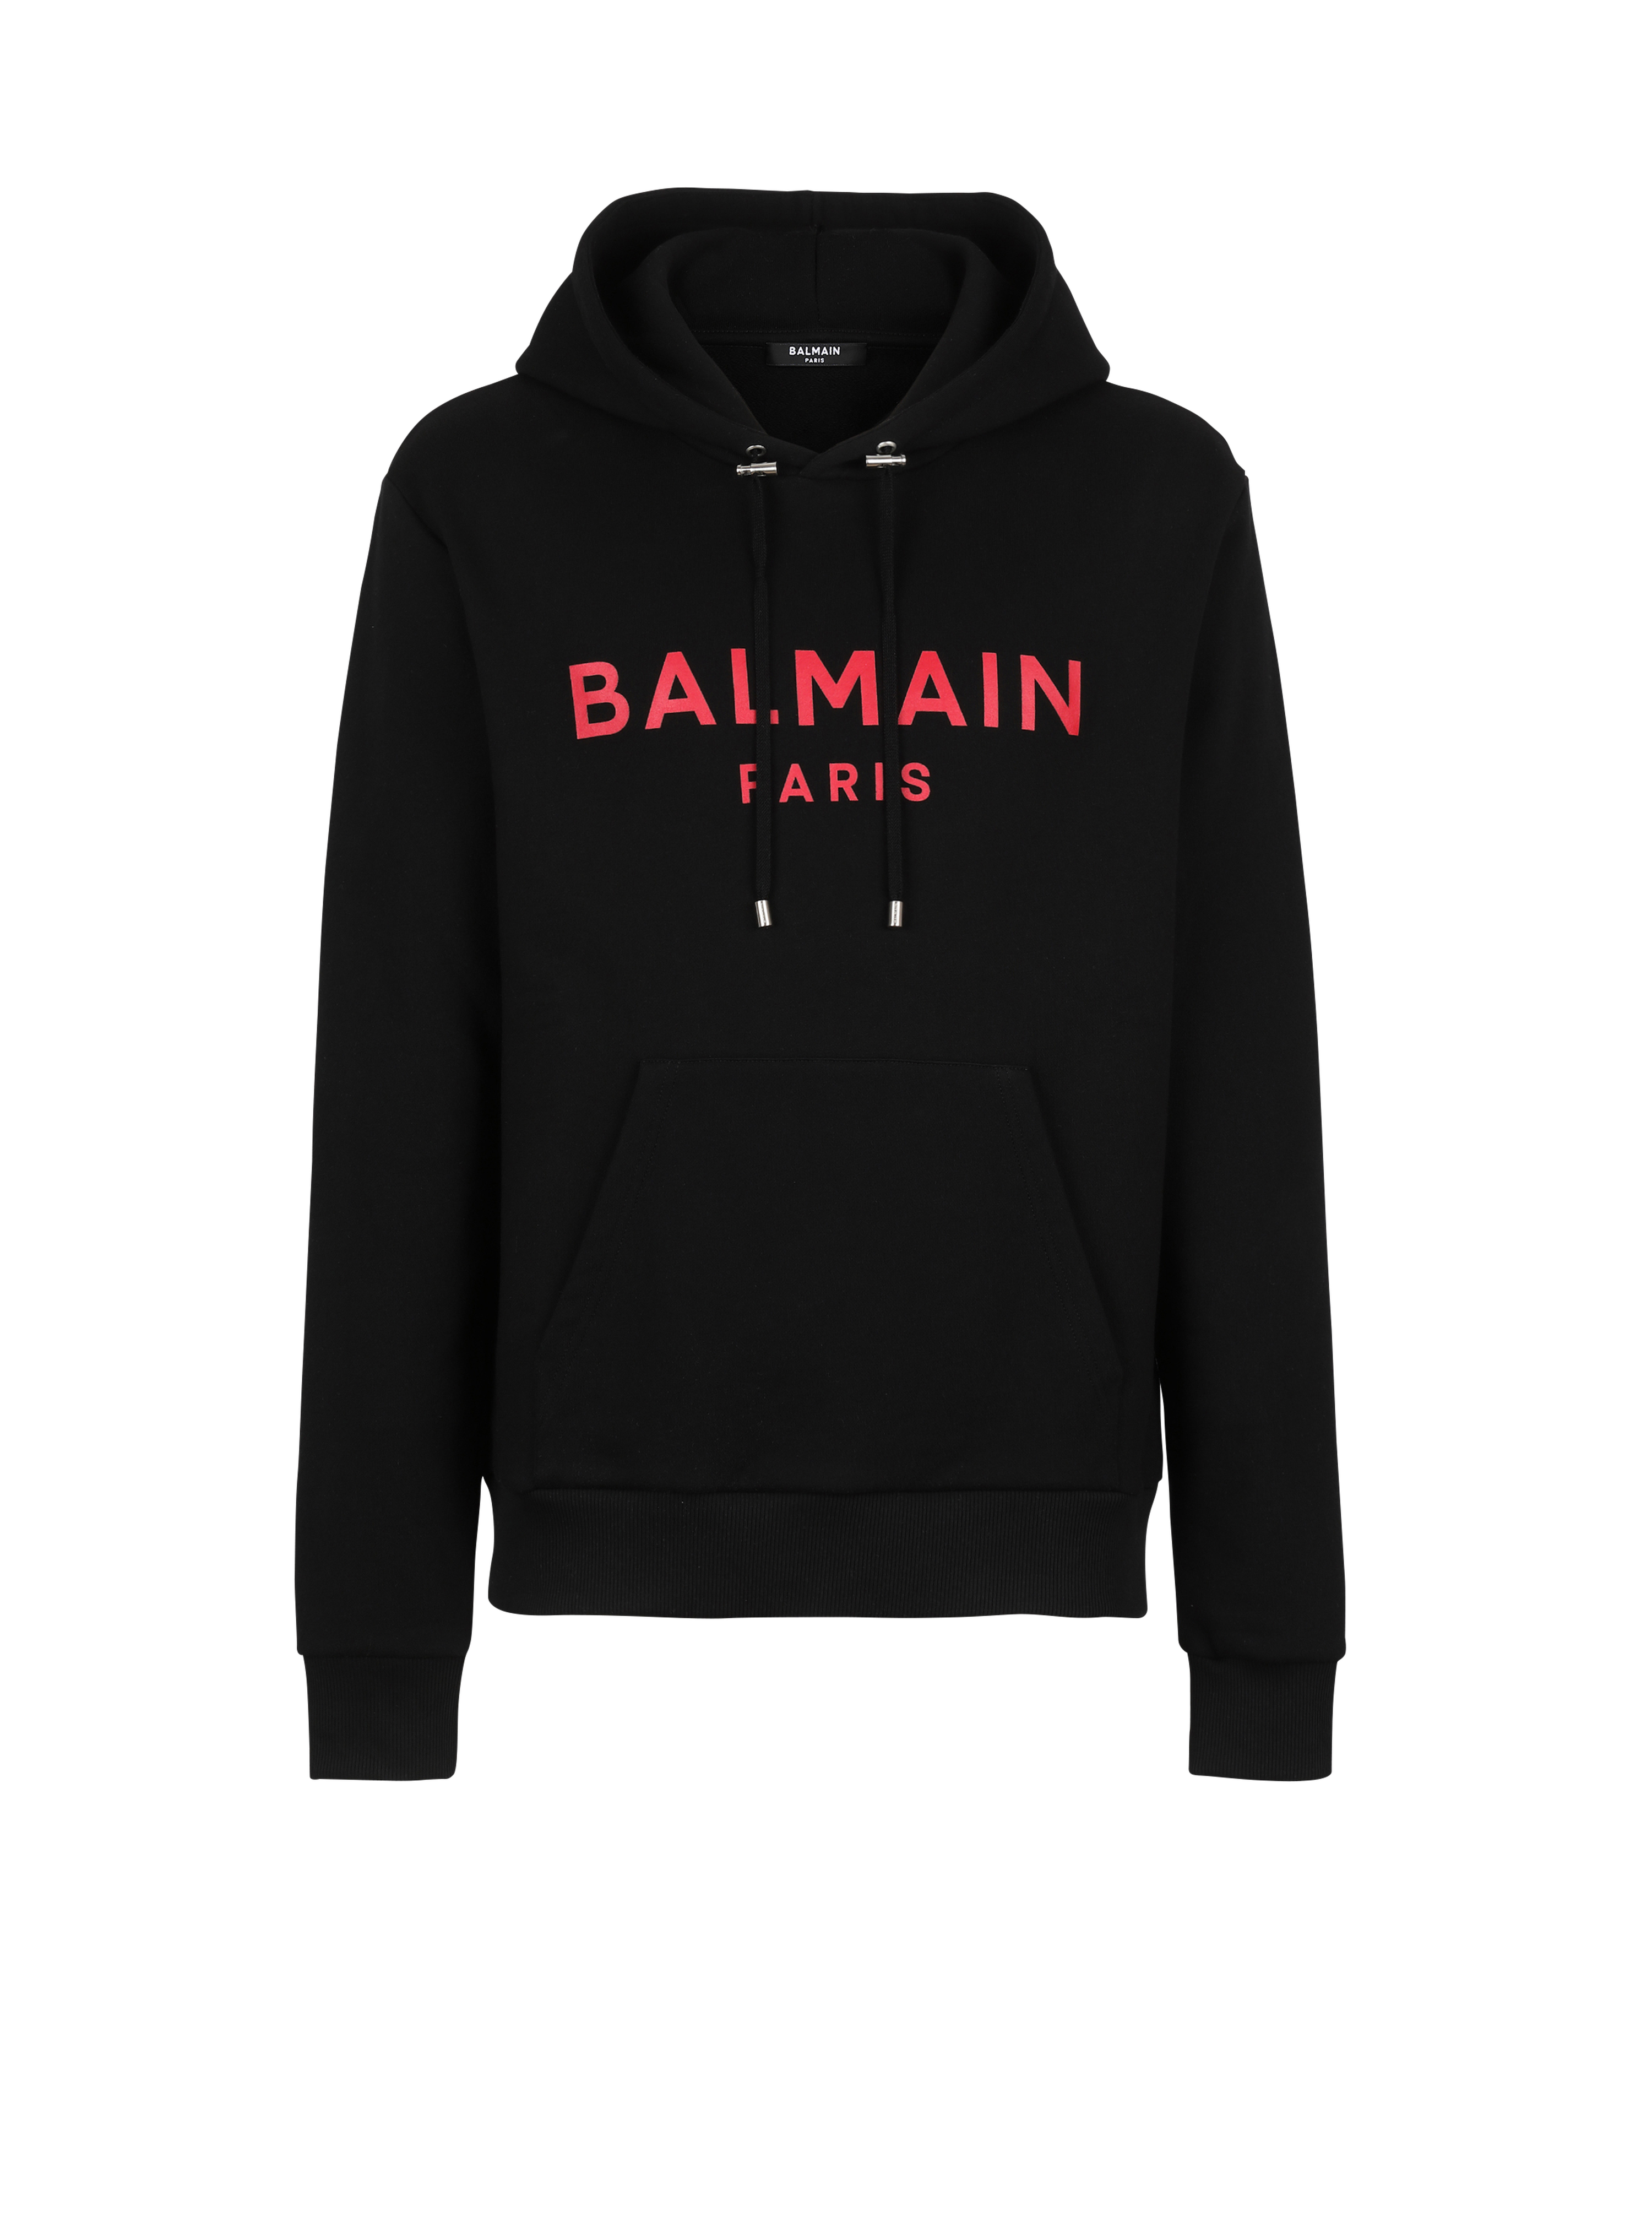 Cotton sweatshirt with Balmain Paris logo print, black